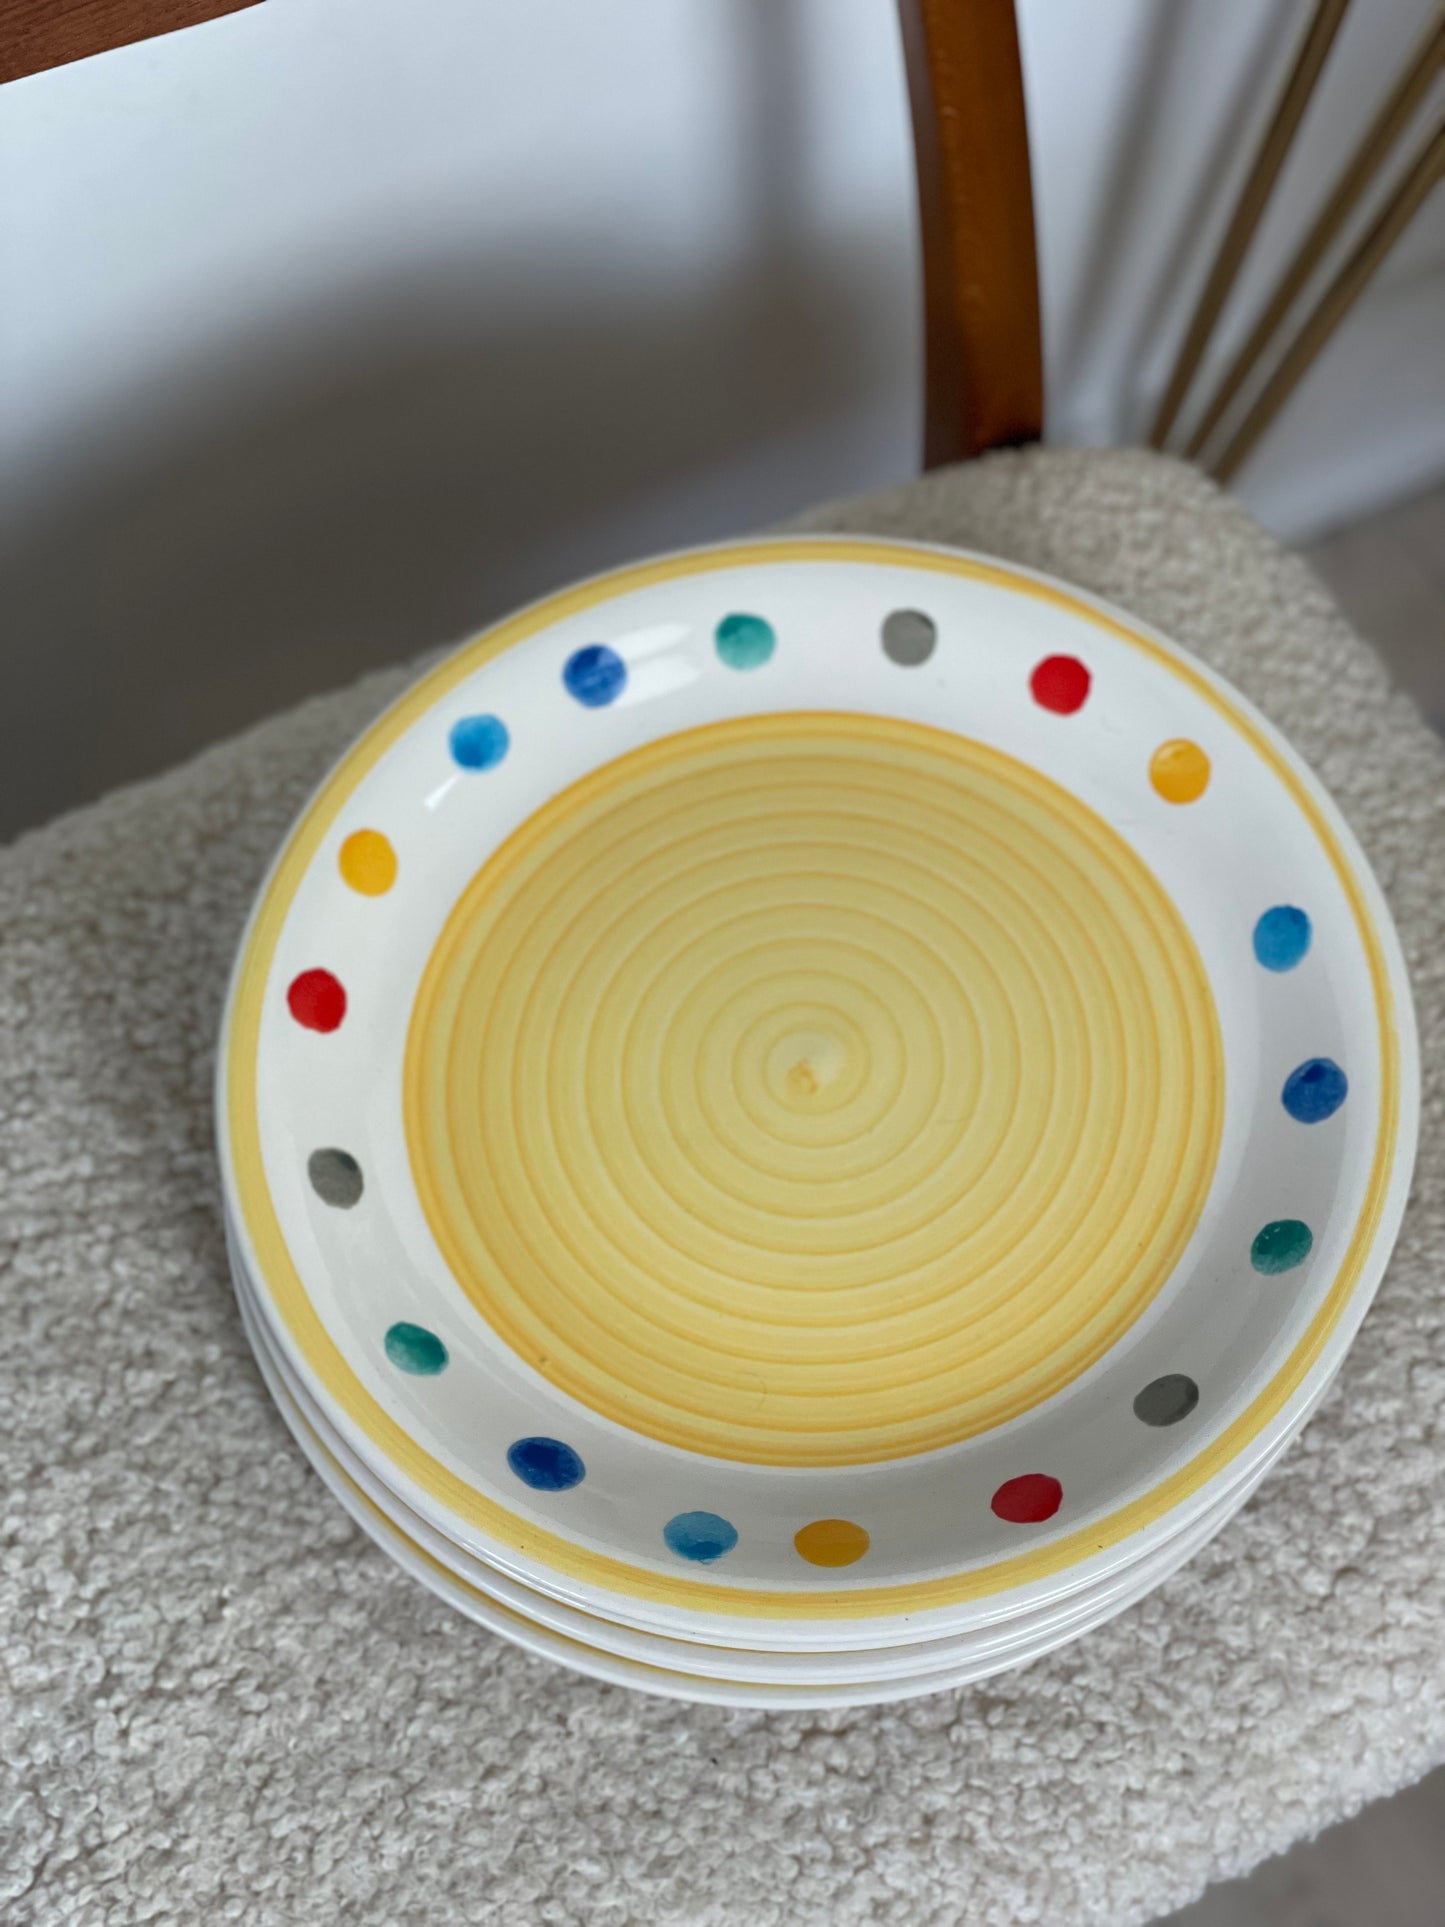 Dinner plates - Tivoli style